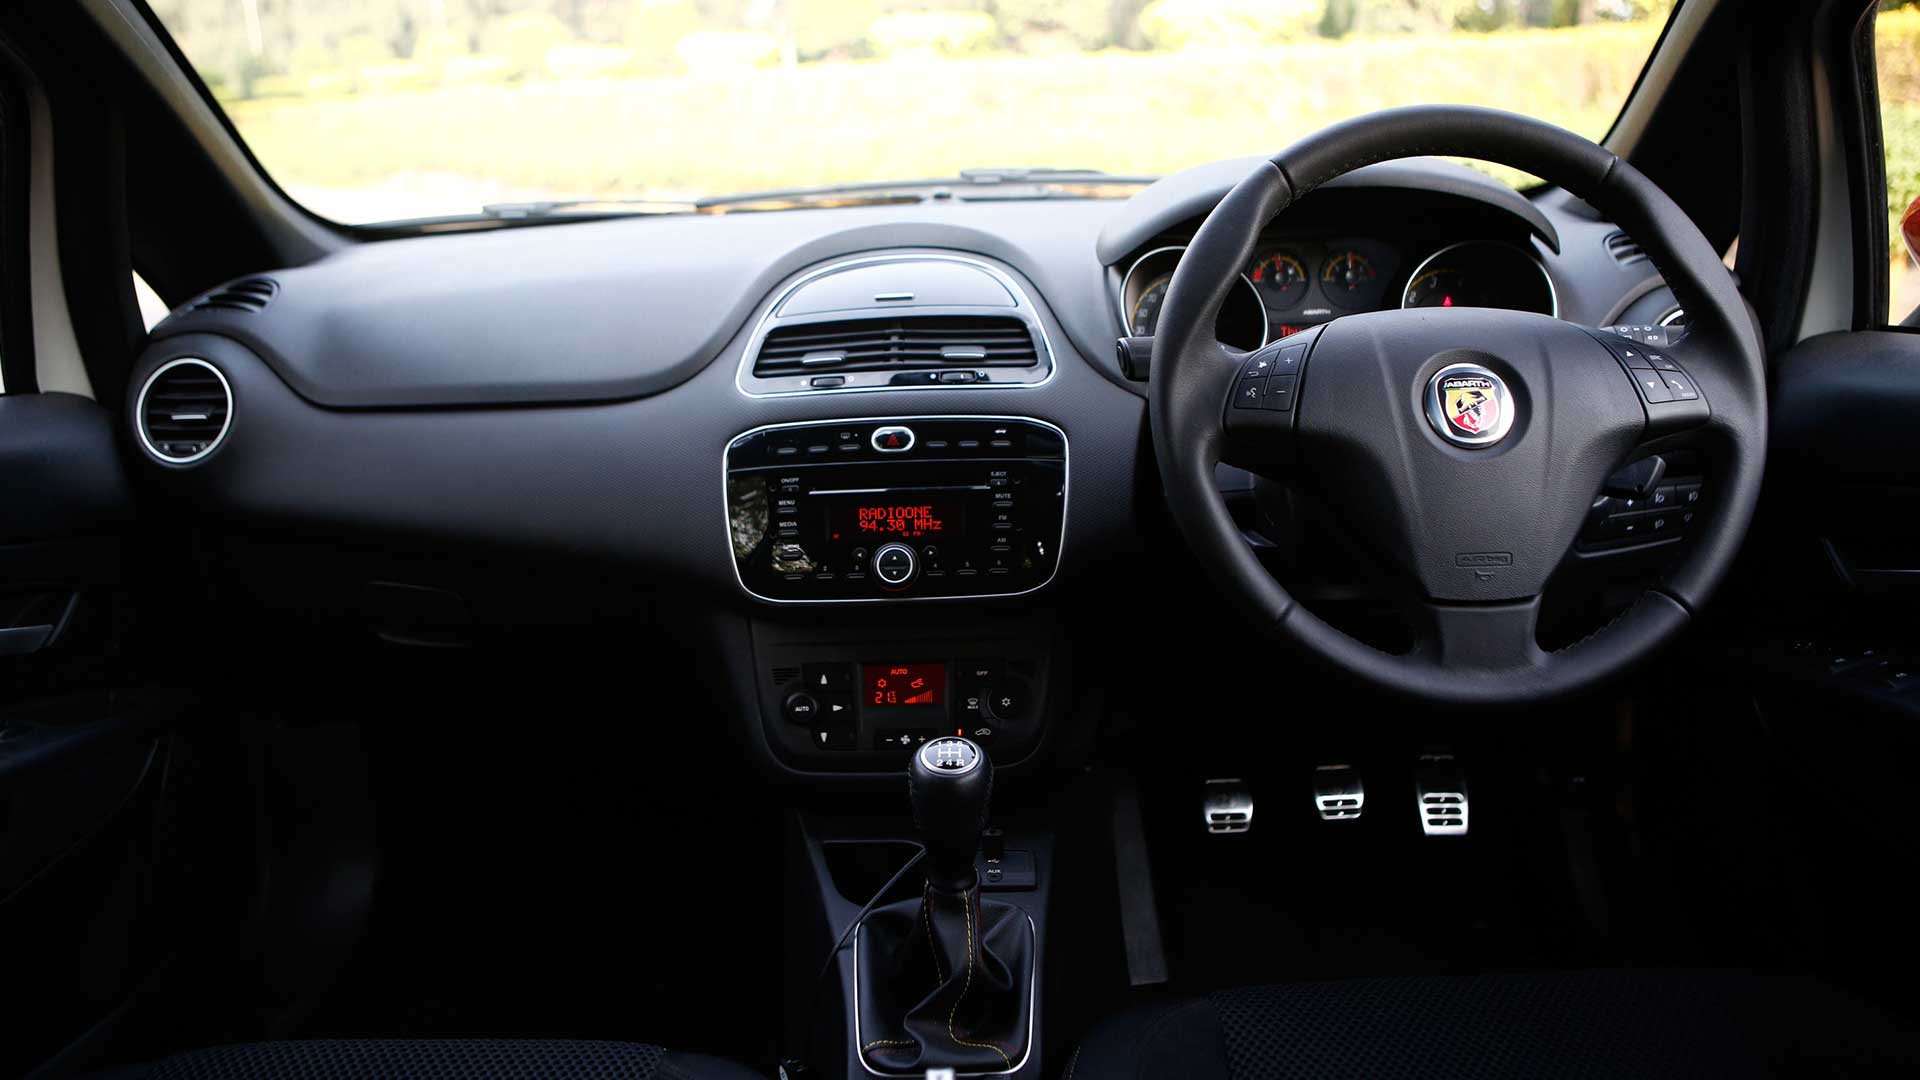 Fiat Abarth Punto 2015 STD Interior Car Photos - Overdrive